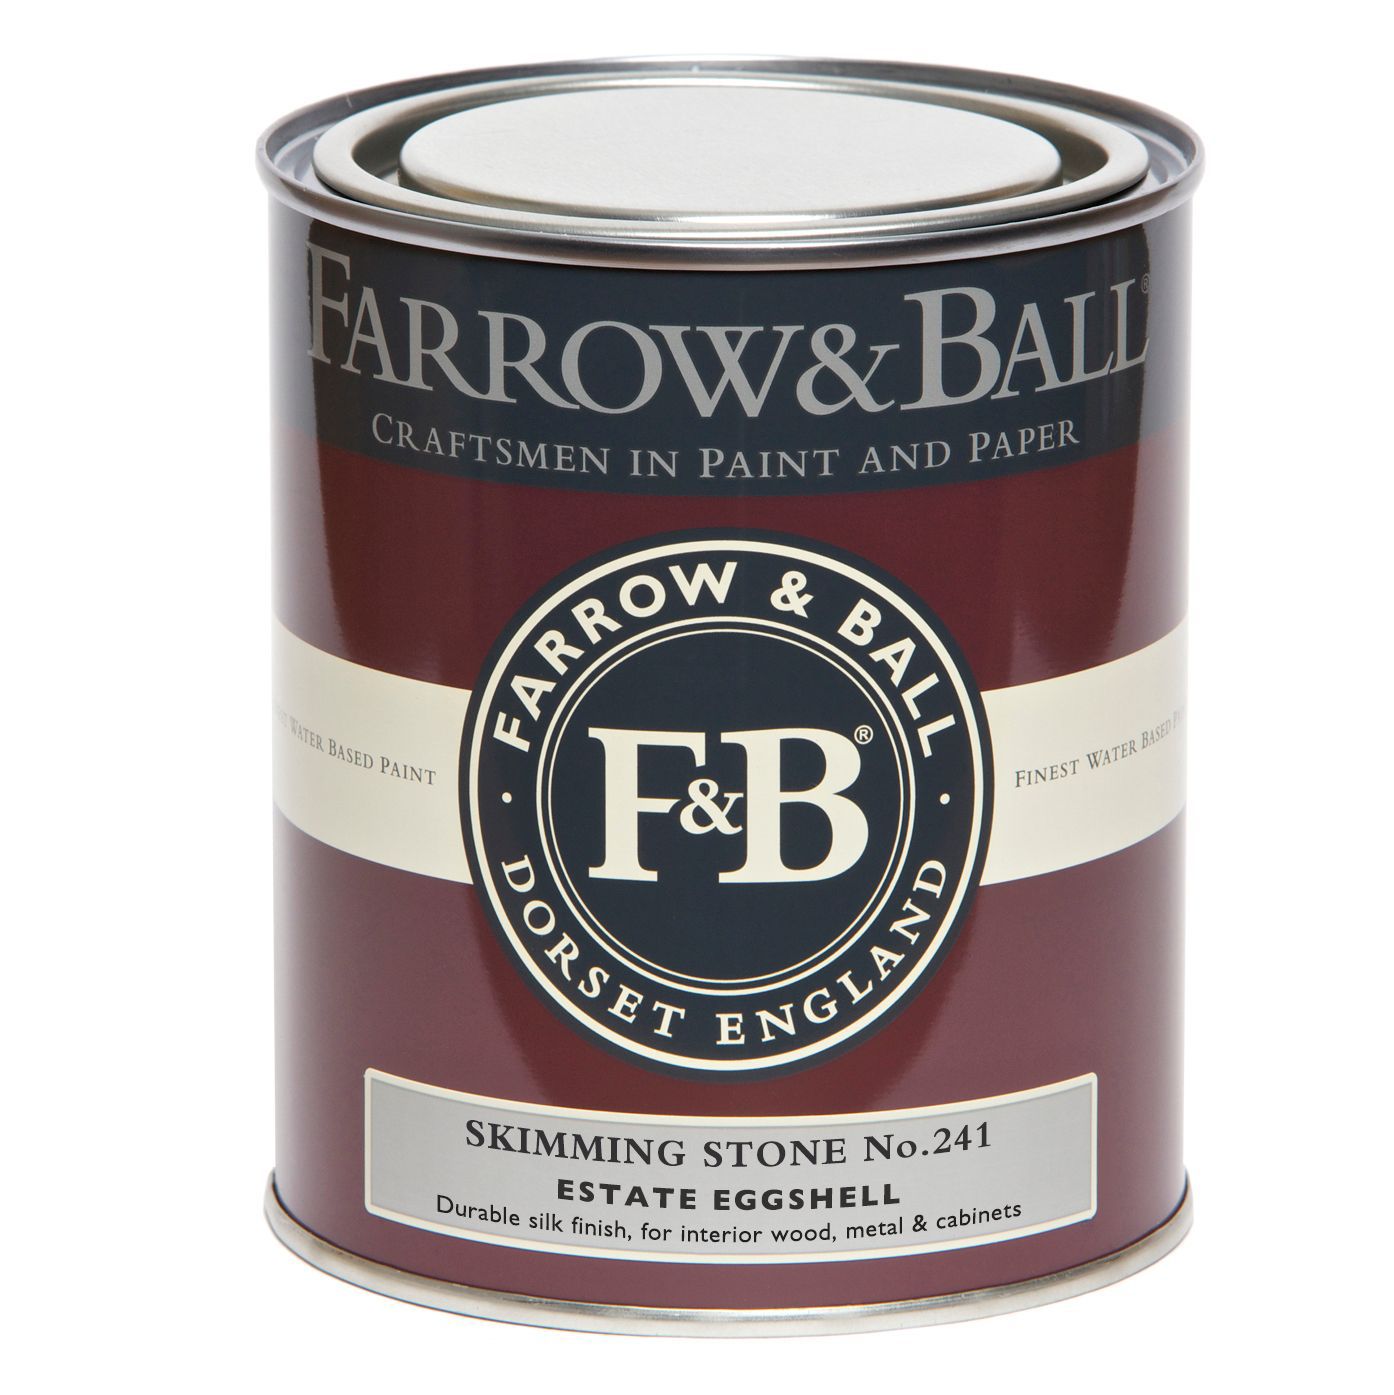 Farrow & Ball Estate Skimming stone No.241 Eggshell Metal & wood paint, 750ml